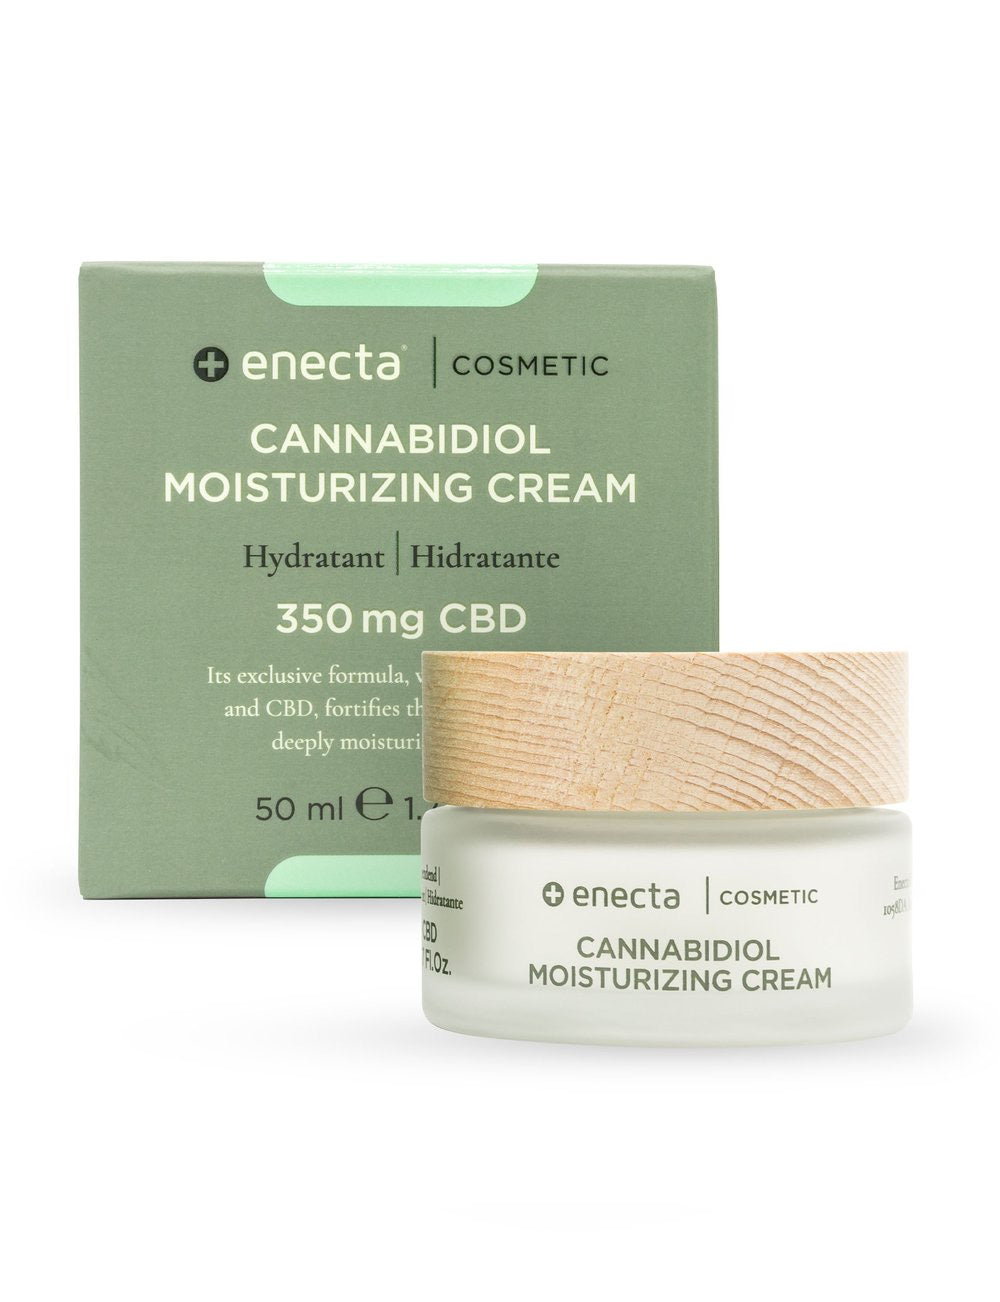 Enecta CBD Moisturizing Cream from When Nature Calls